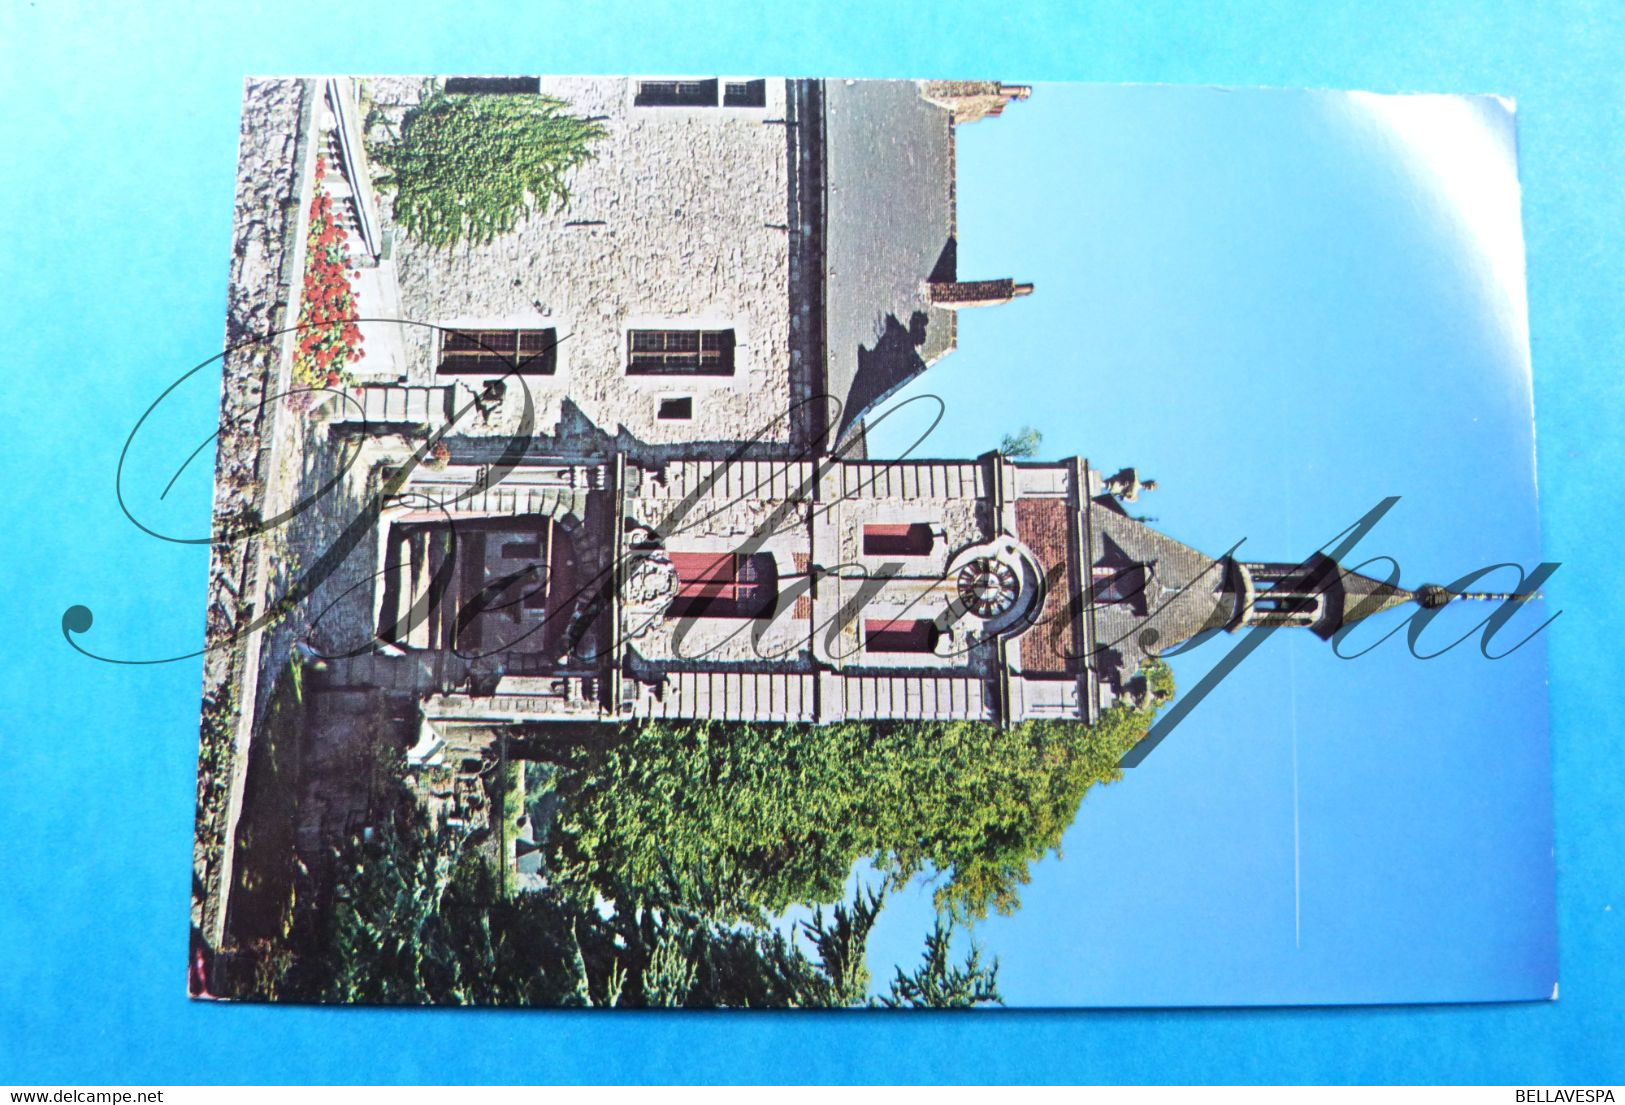 Ecaussinnes Chateau LOT x 37 Carte postale